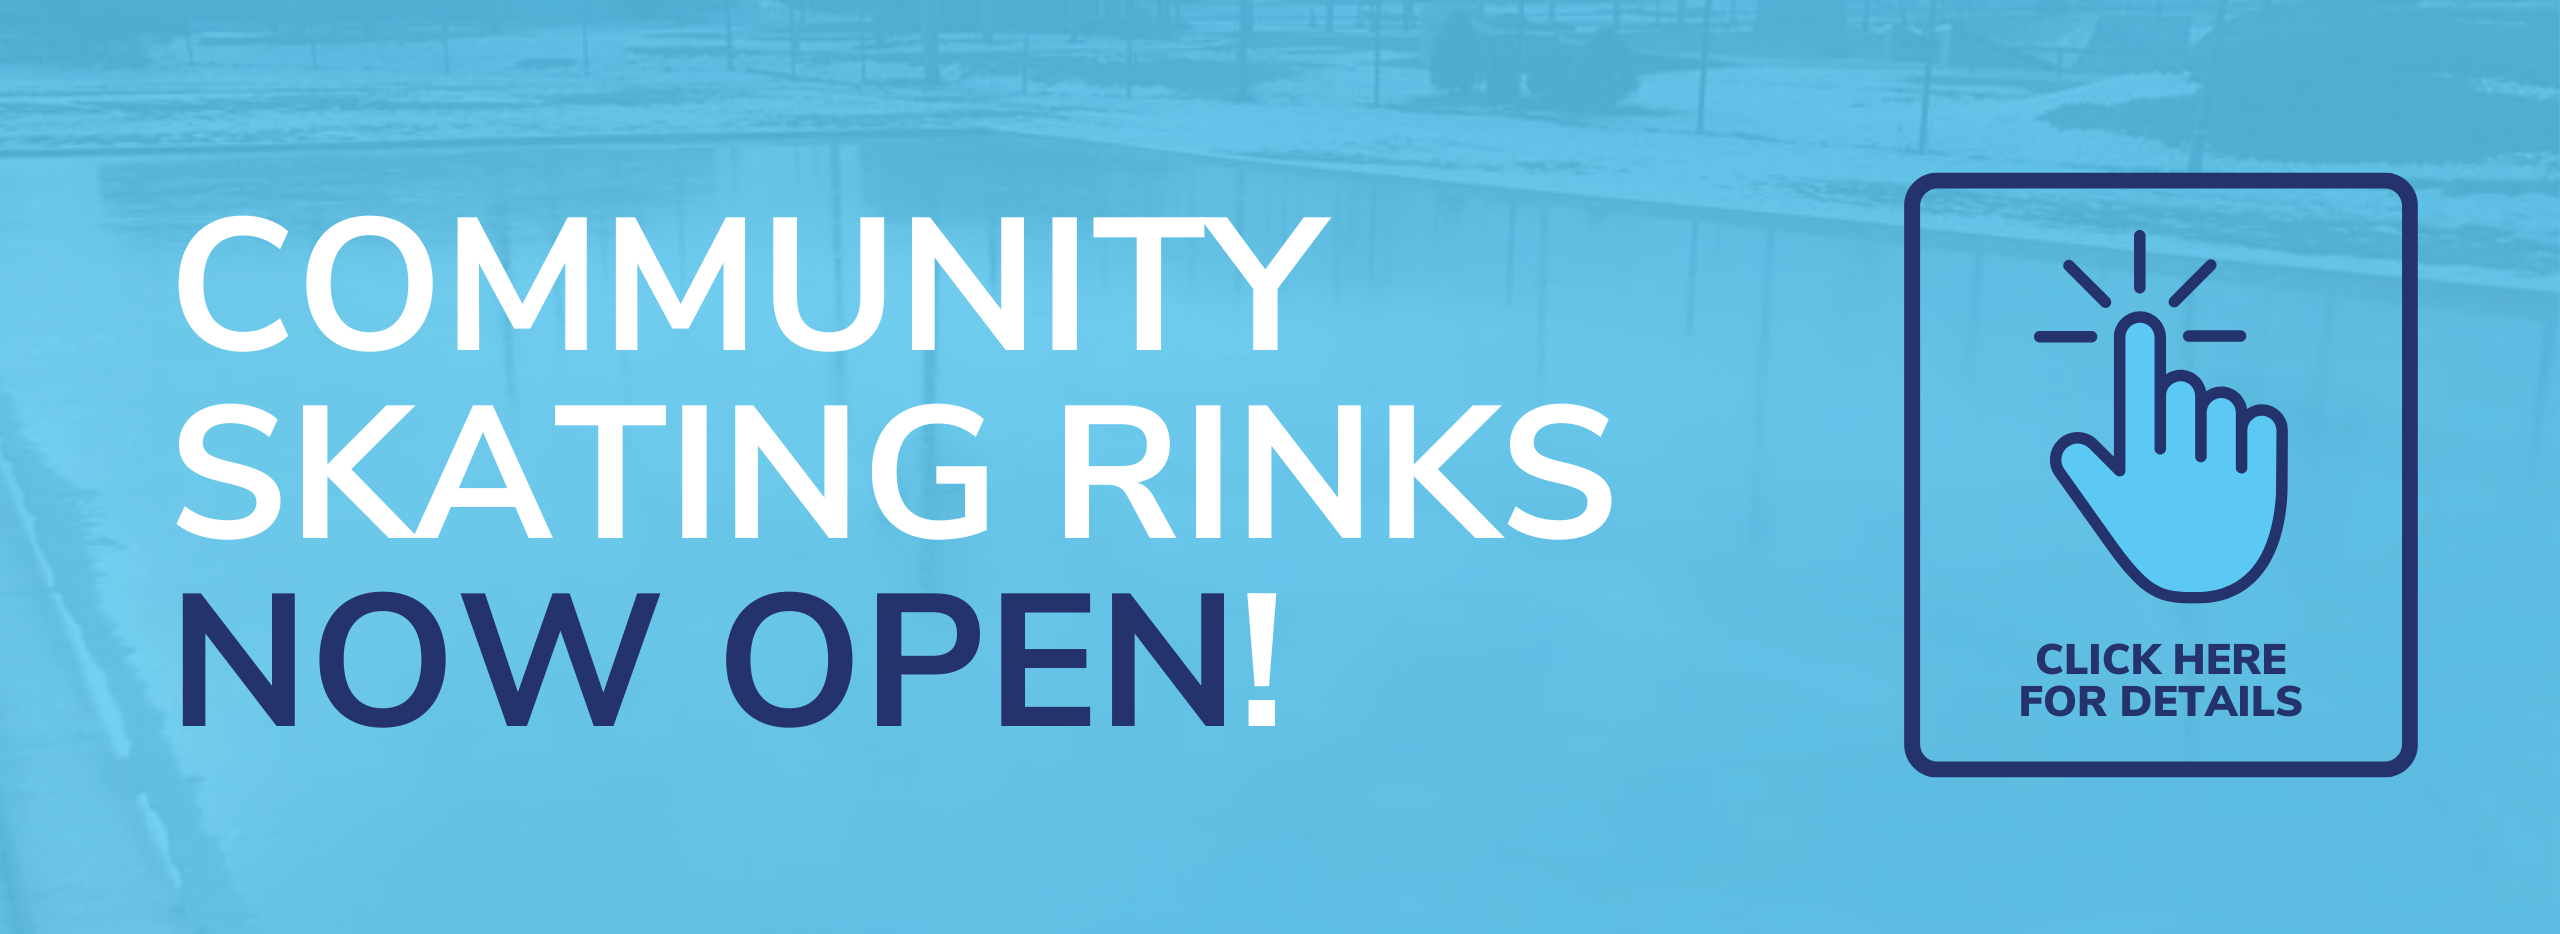 Community Skating Rink Website Graphic_2560 × 934 px (1)